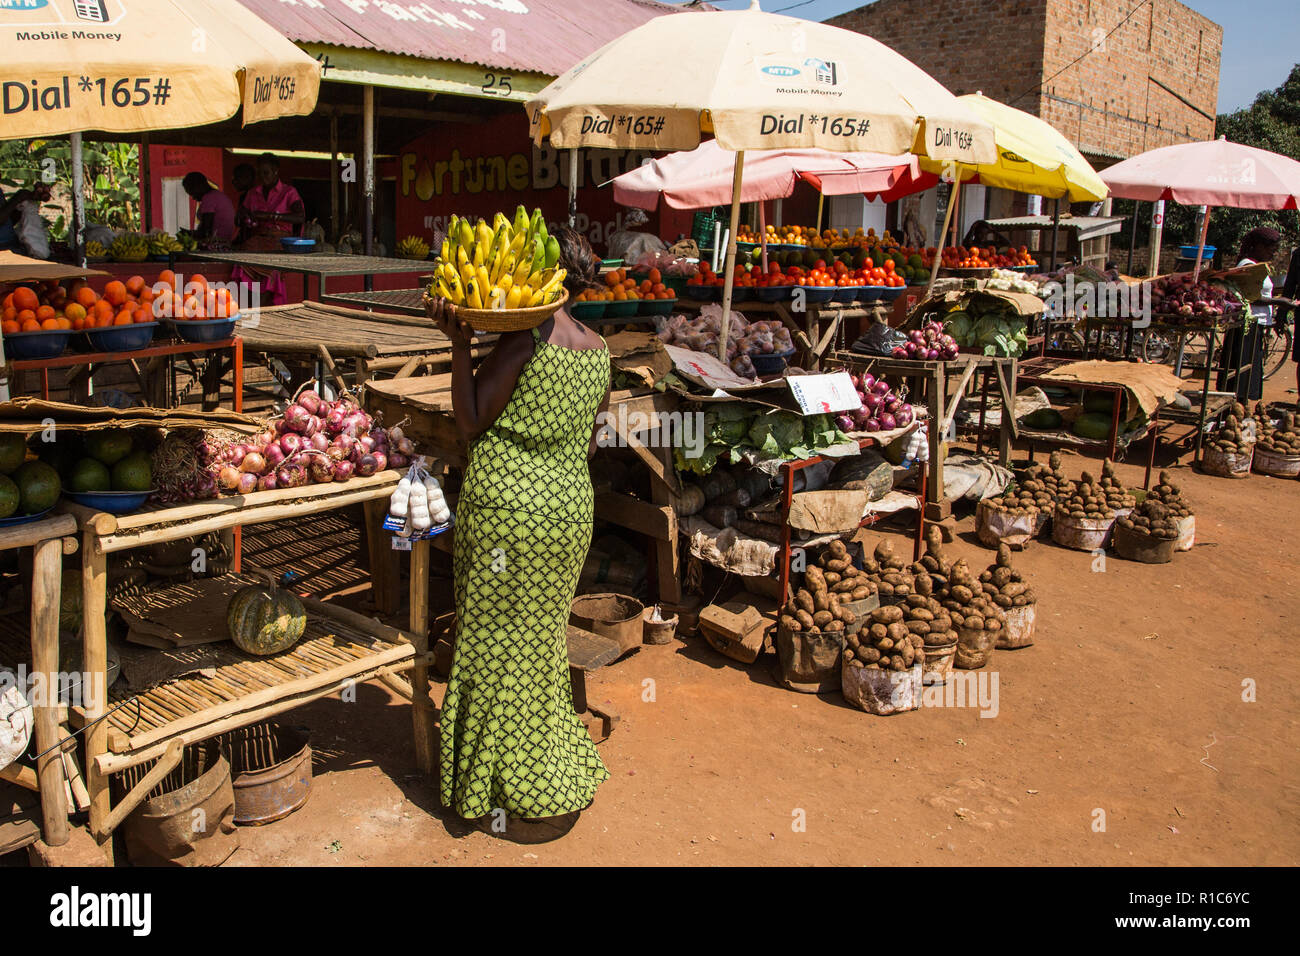 A fruit market in Uganda Stock Photo